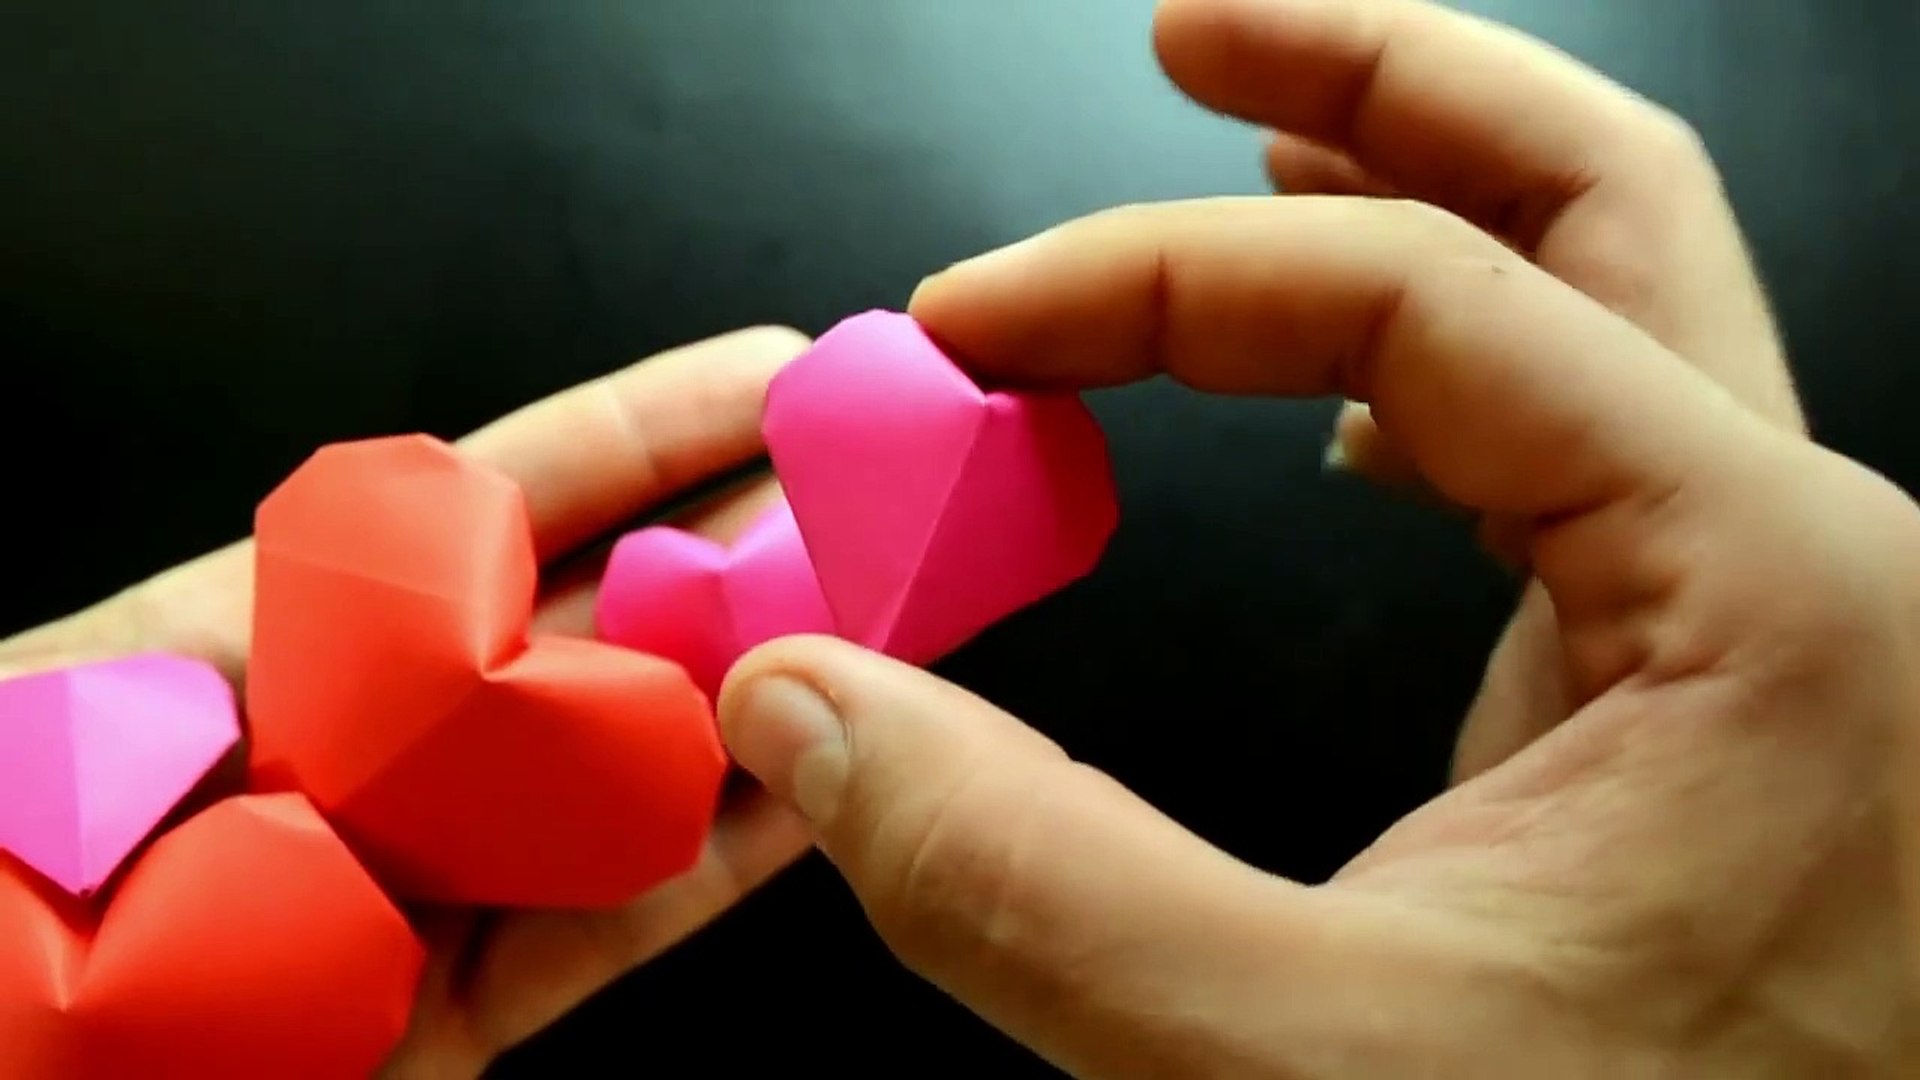 Easy Origami Magic Transforming Flexahedron